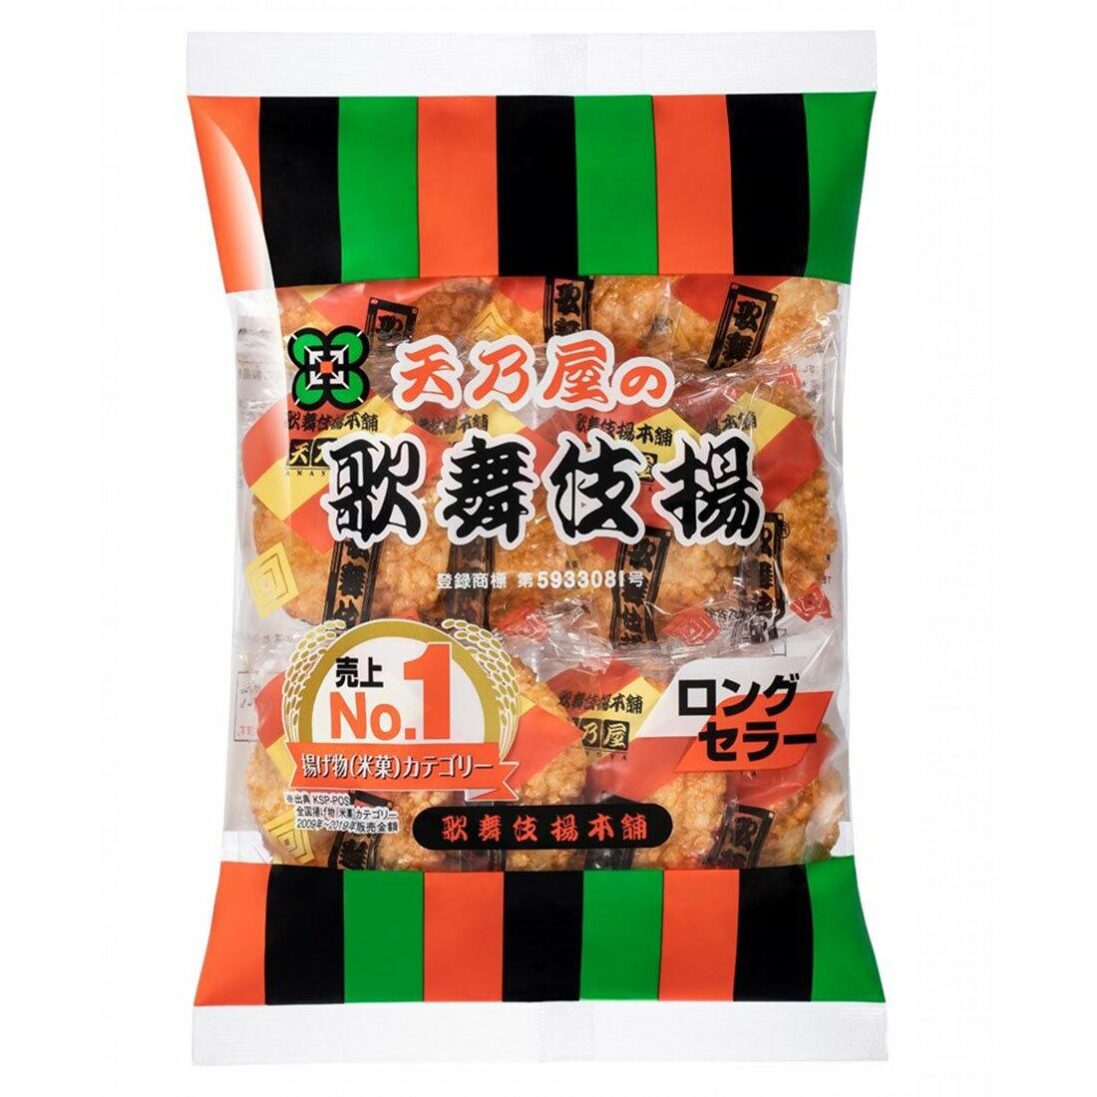 Amanoya Kabukiage Sweet Soy Sauce Rice Crackers (Pack of 5 Bags)